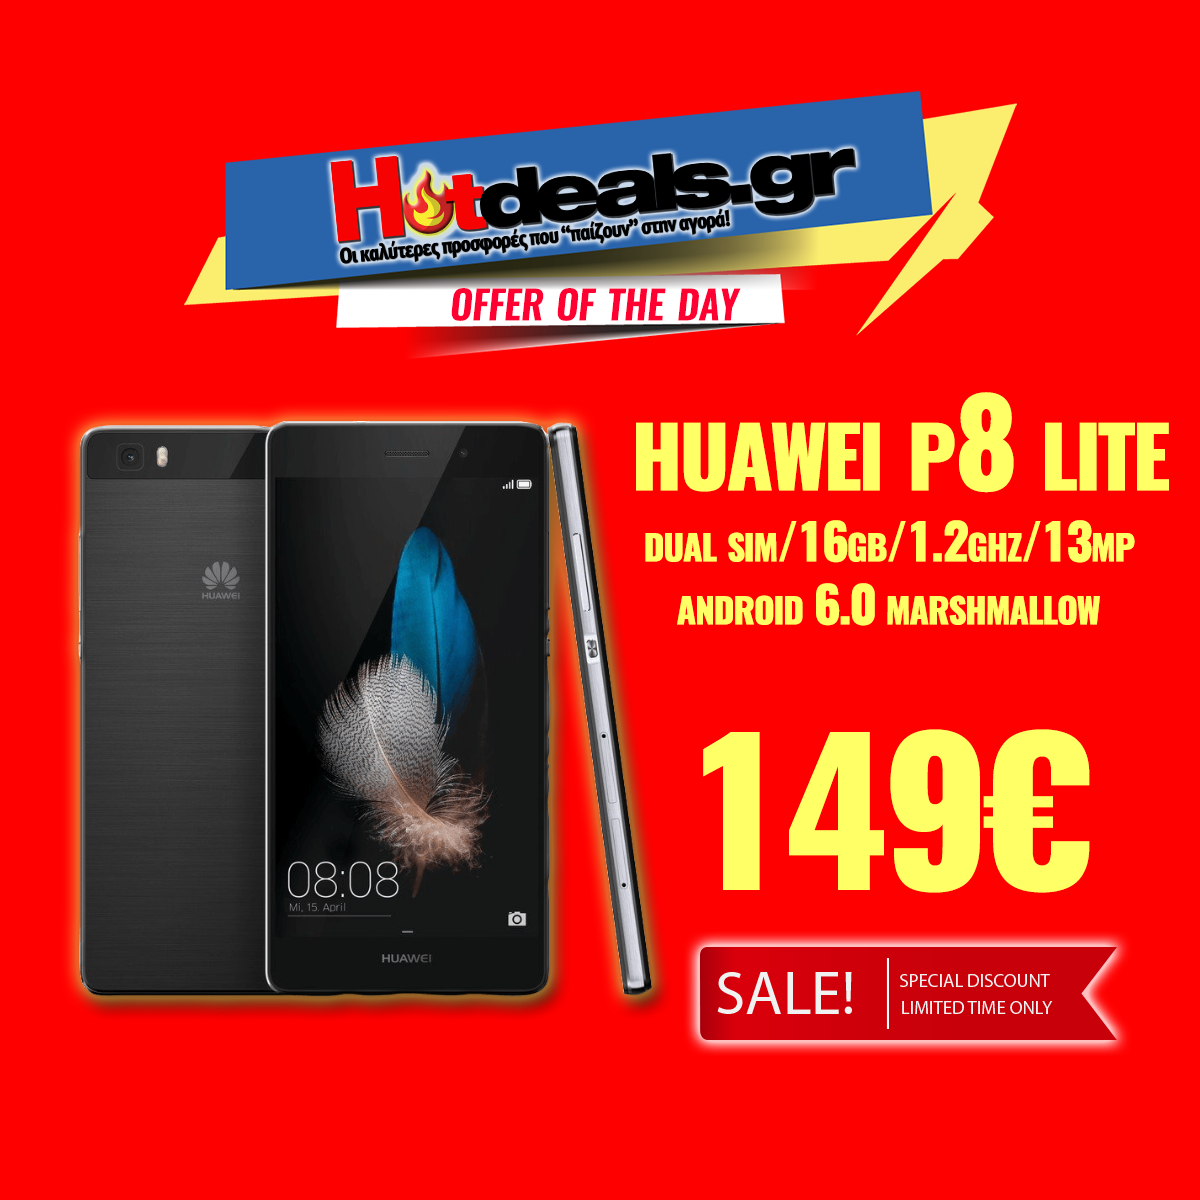 huawei-p8-lite-16gb-13mp-kirin-620-sale-price-hotdealsgr